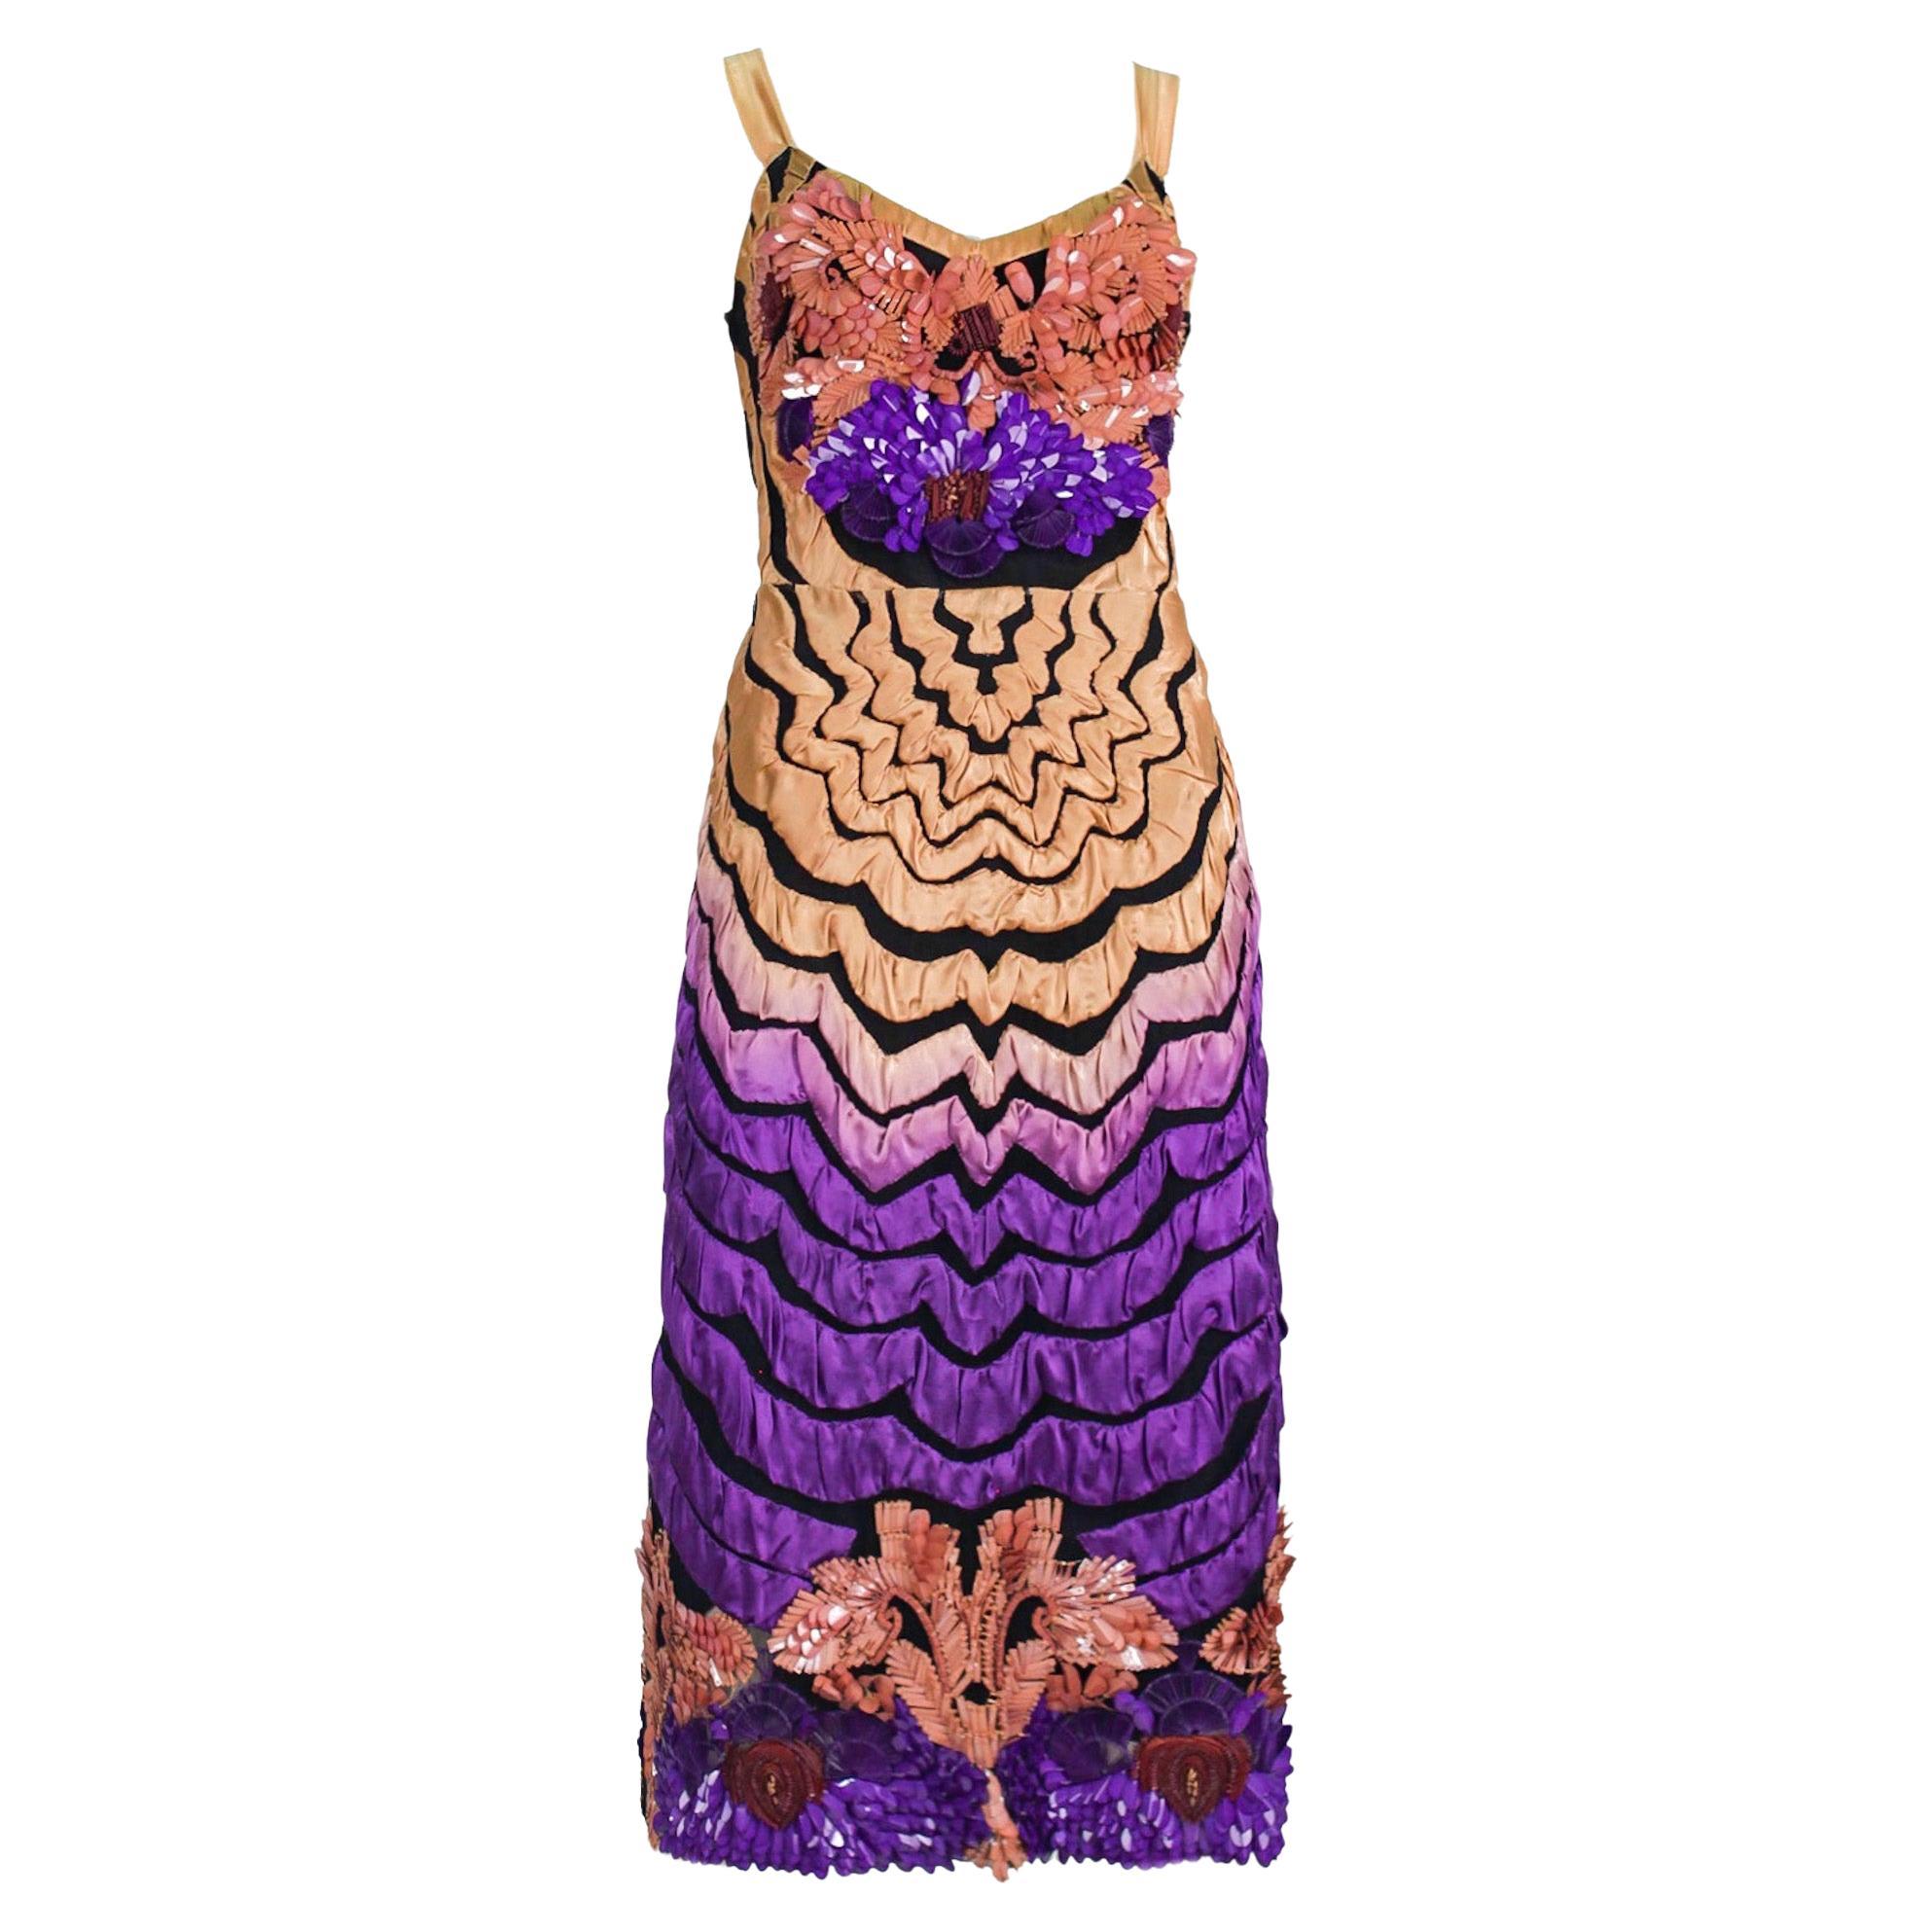 Alberta Ferretti Runway 2016 Ombré Silk Embellished Embroidered Cocktail Dress